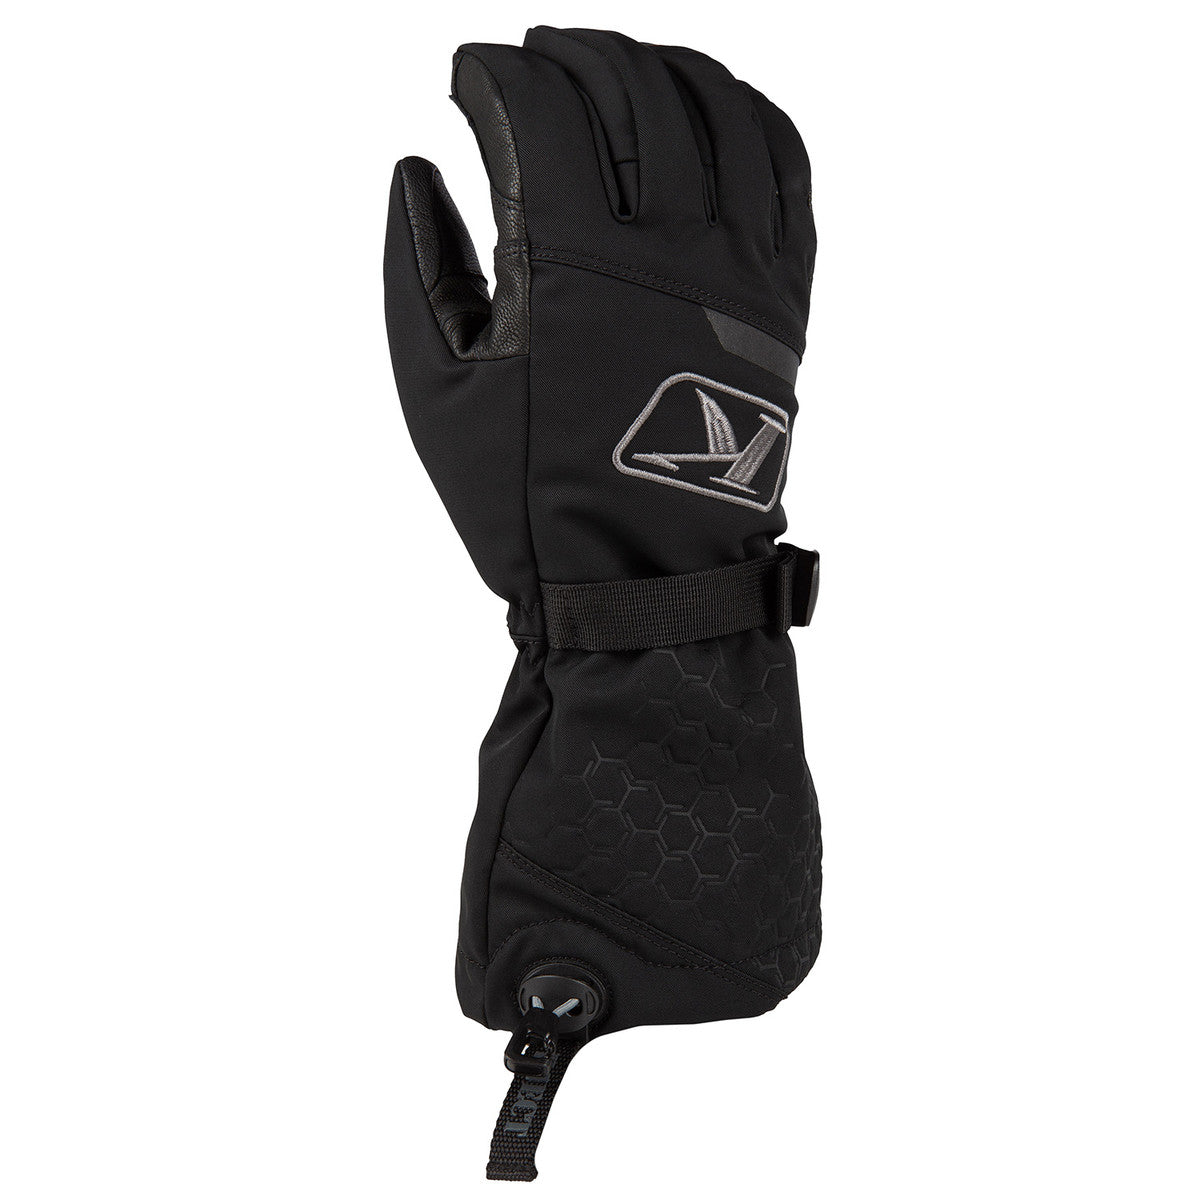 Powerxross Gauntlet Gloves